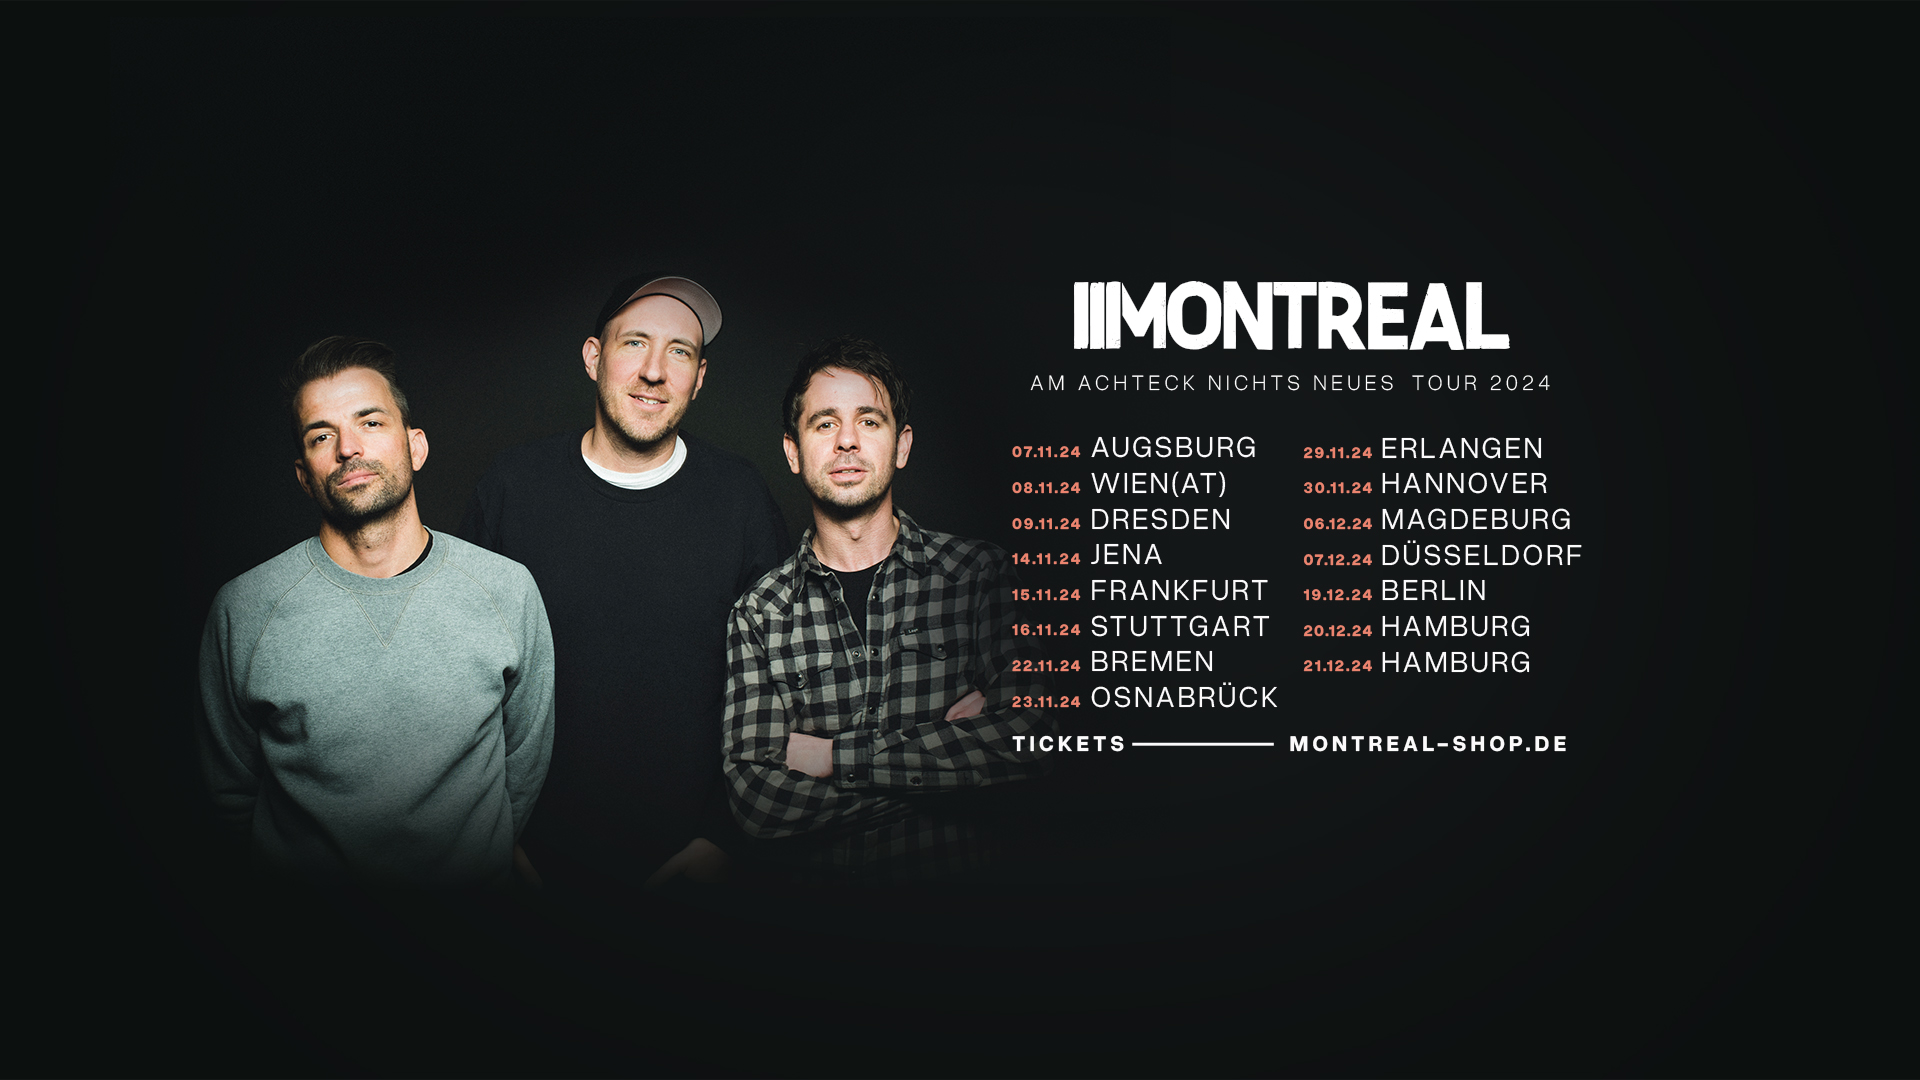 Montreal // Am Achteck nichts Neues Tour 2024 // 06.12.2024